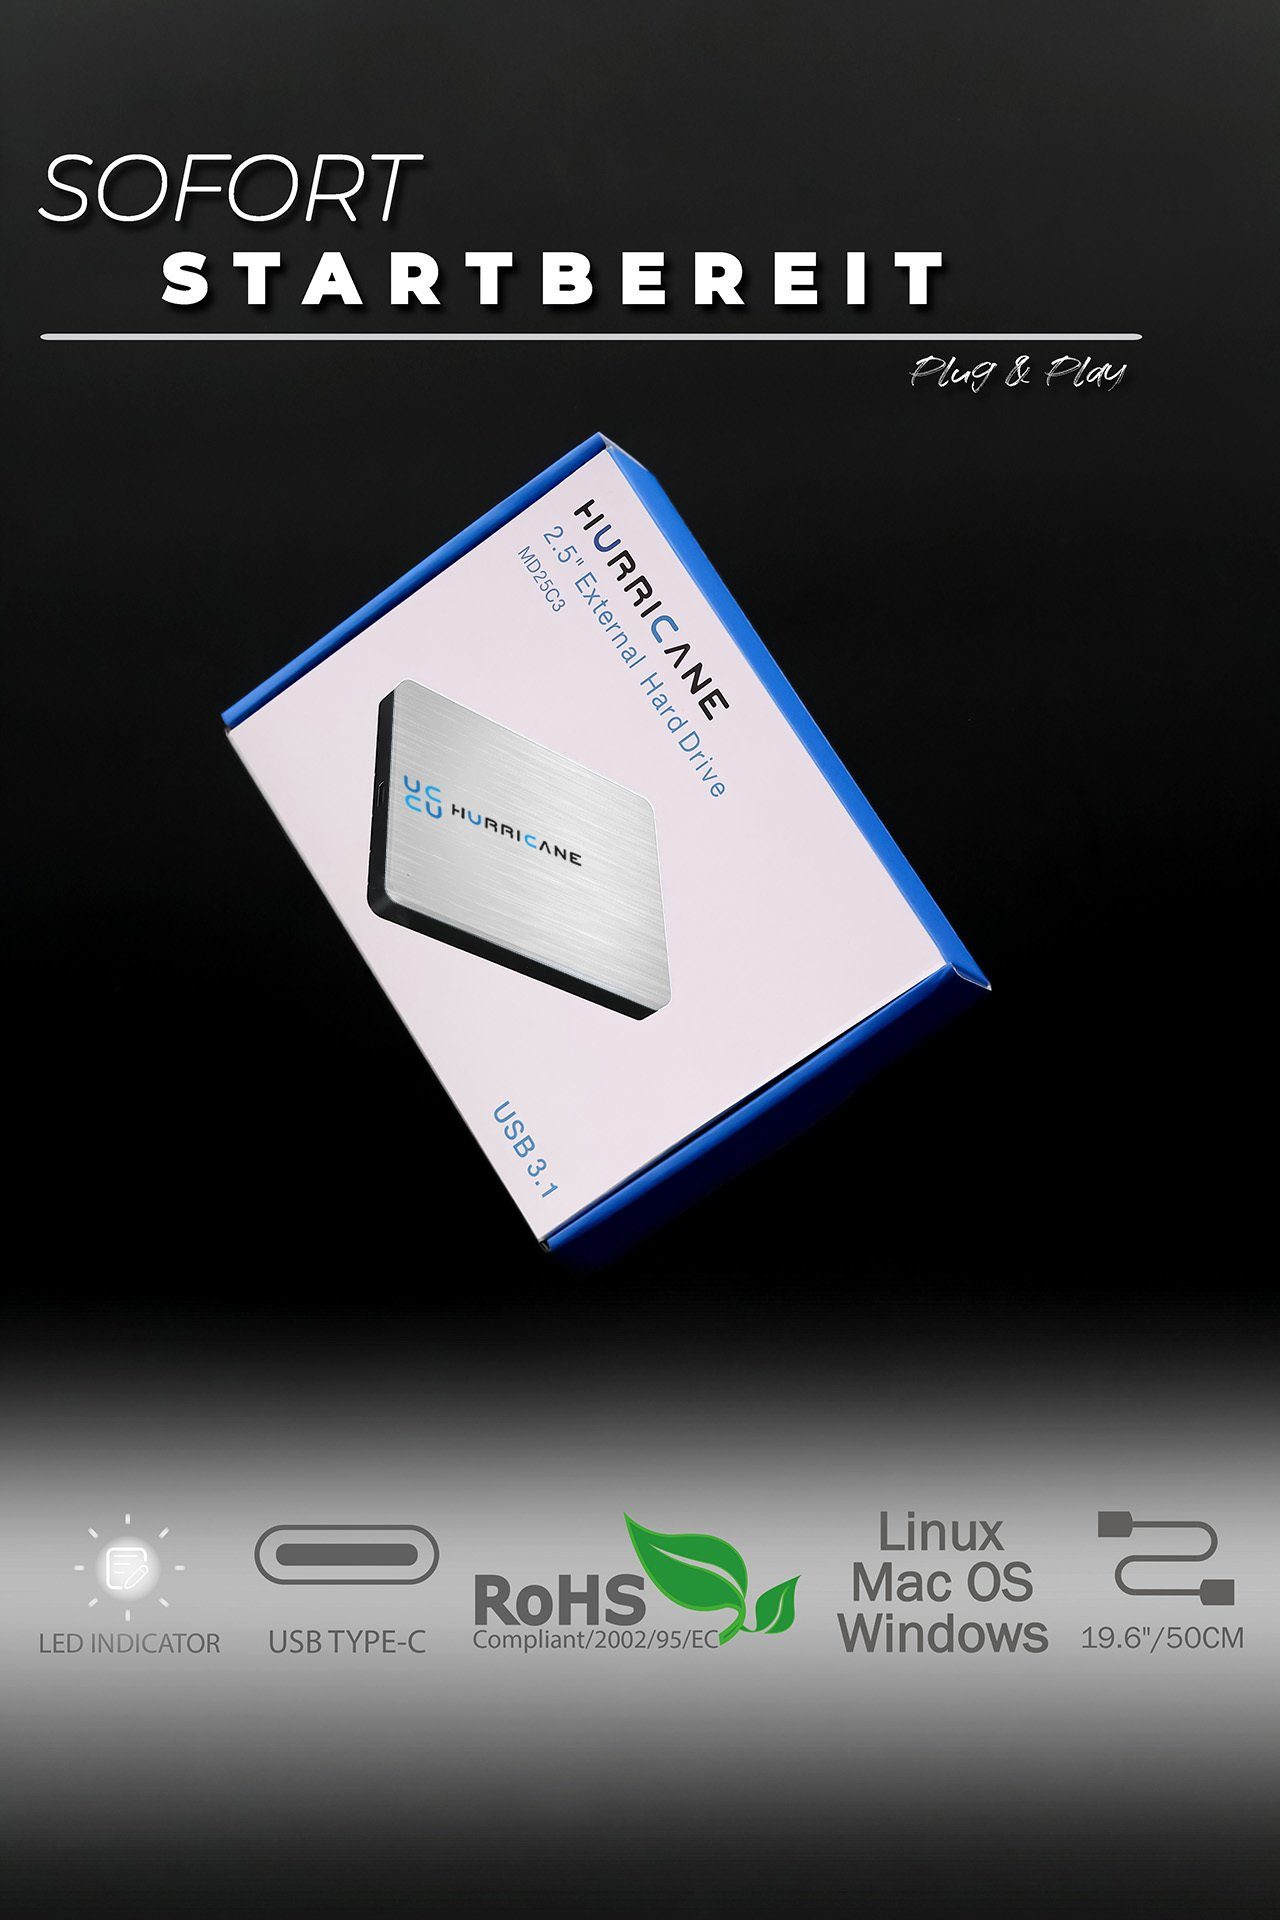 HURRICANE MD25C3 Tragbare Externe Festplatte externe (1TB) Linux PS5 USB 2,5" Xbox, 1TB kompatibel PS4 TV und C Windows Mac für Laptop HDD-Festplatte 2,5", smart mit